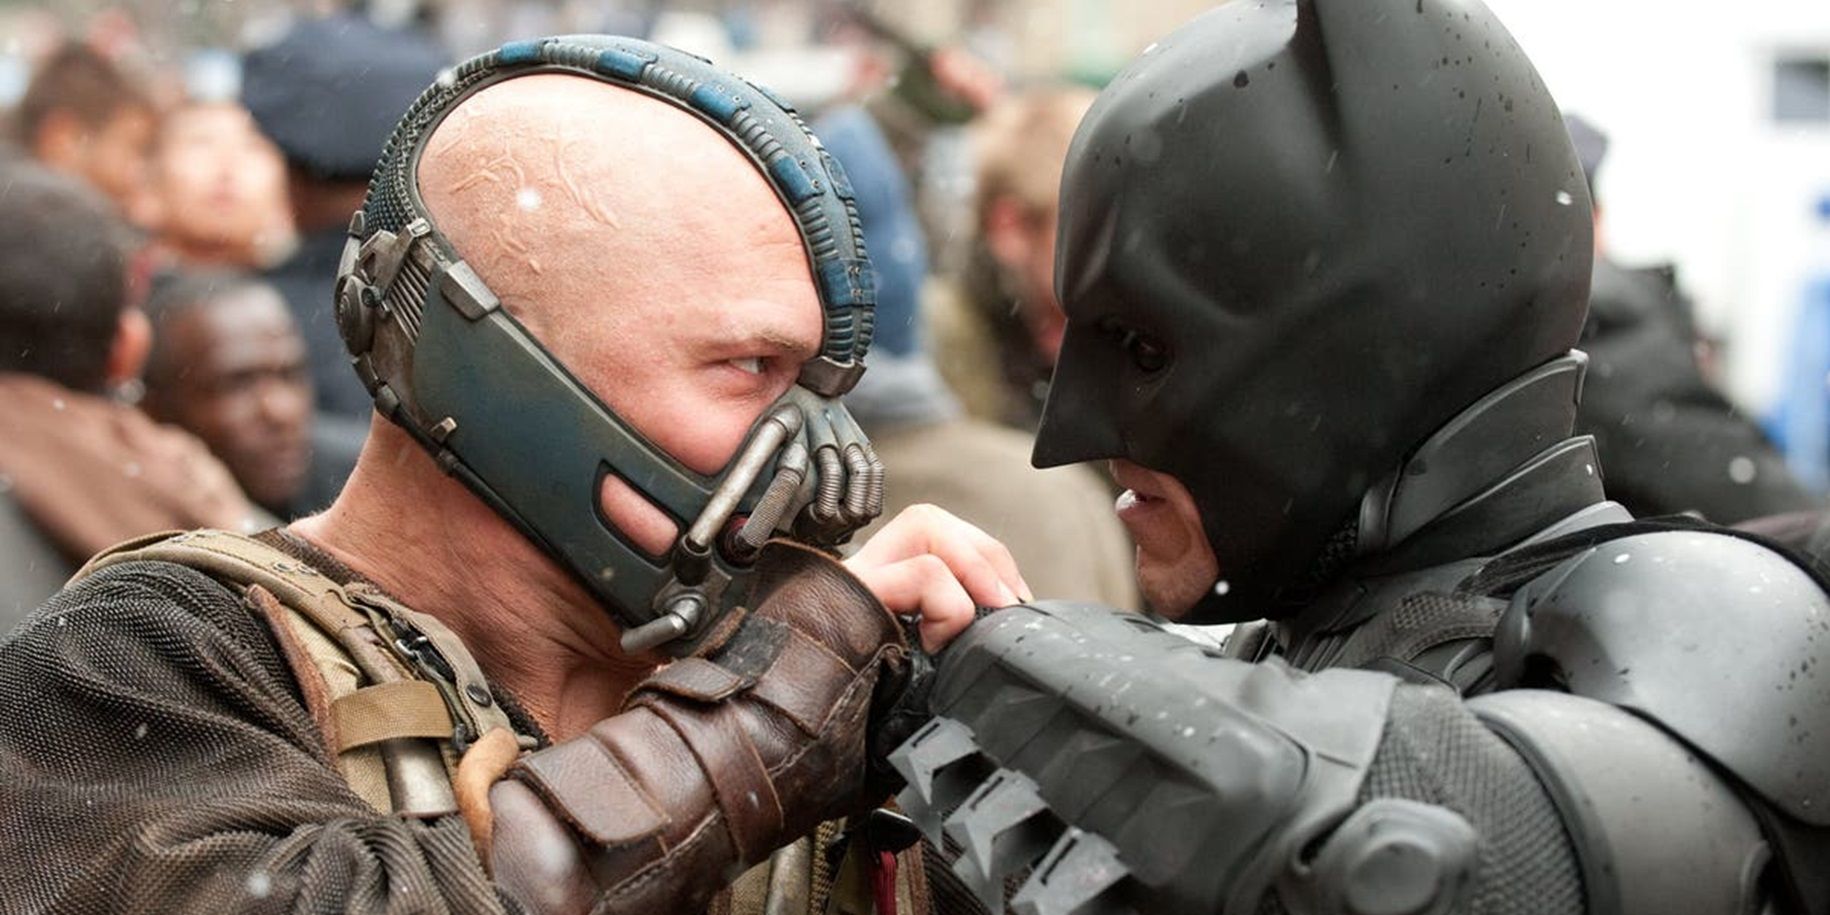 Bane fights Batman in the final battle of The Dark Knight Rises